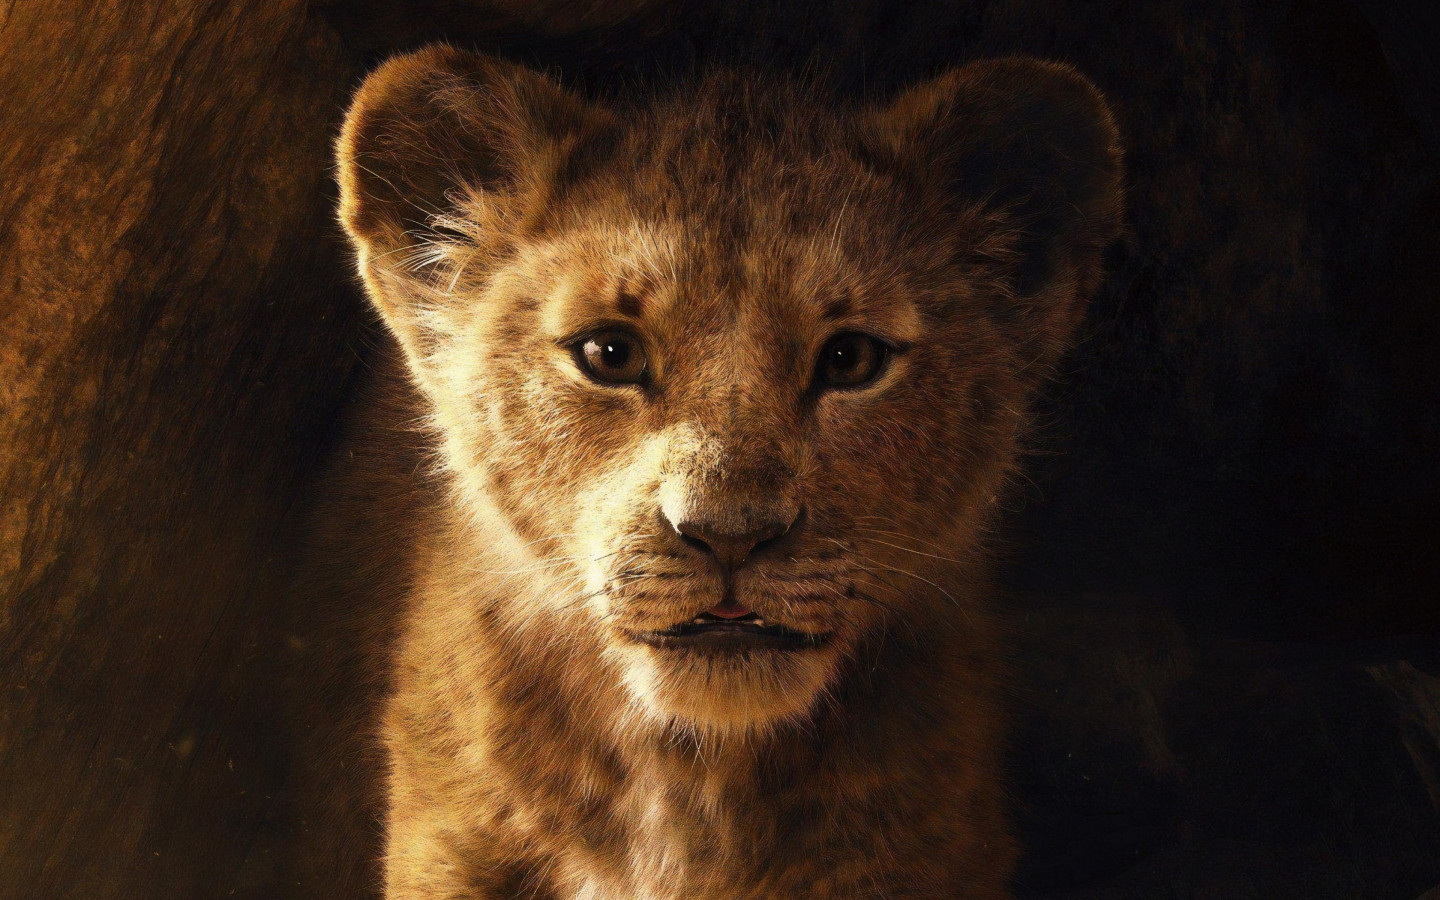 The Lion King 2019 wallpaper 1440x900